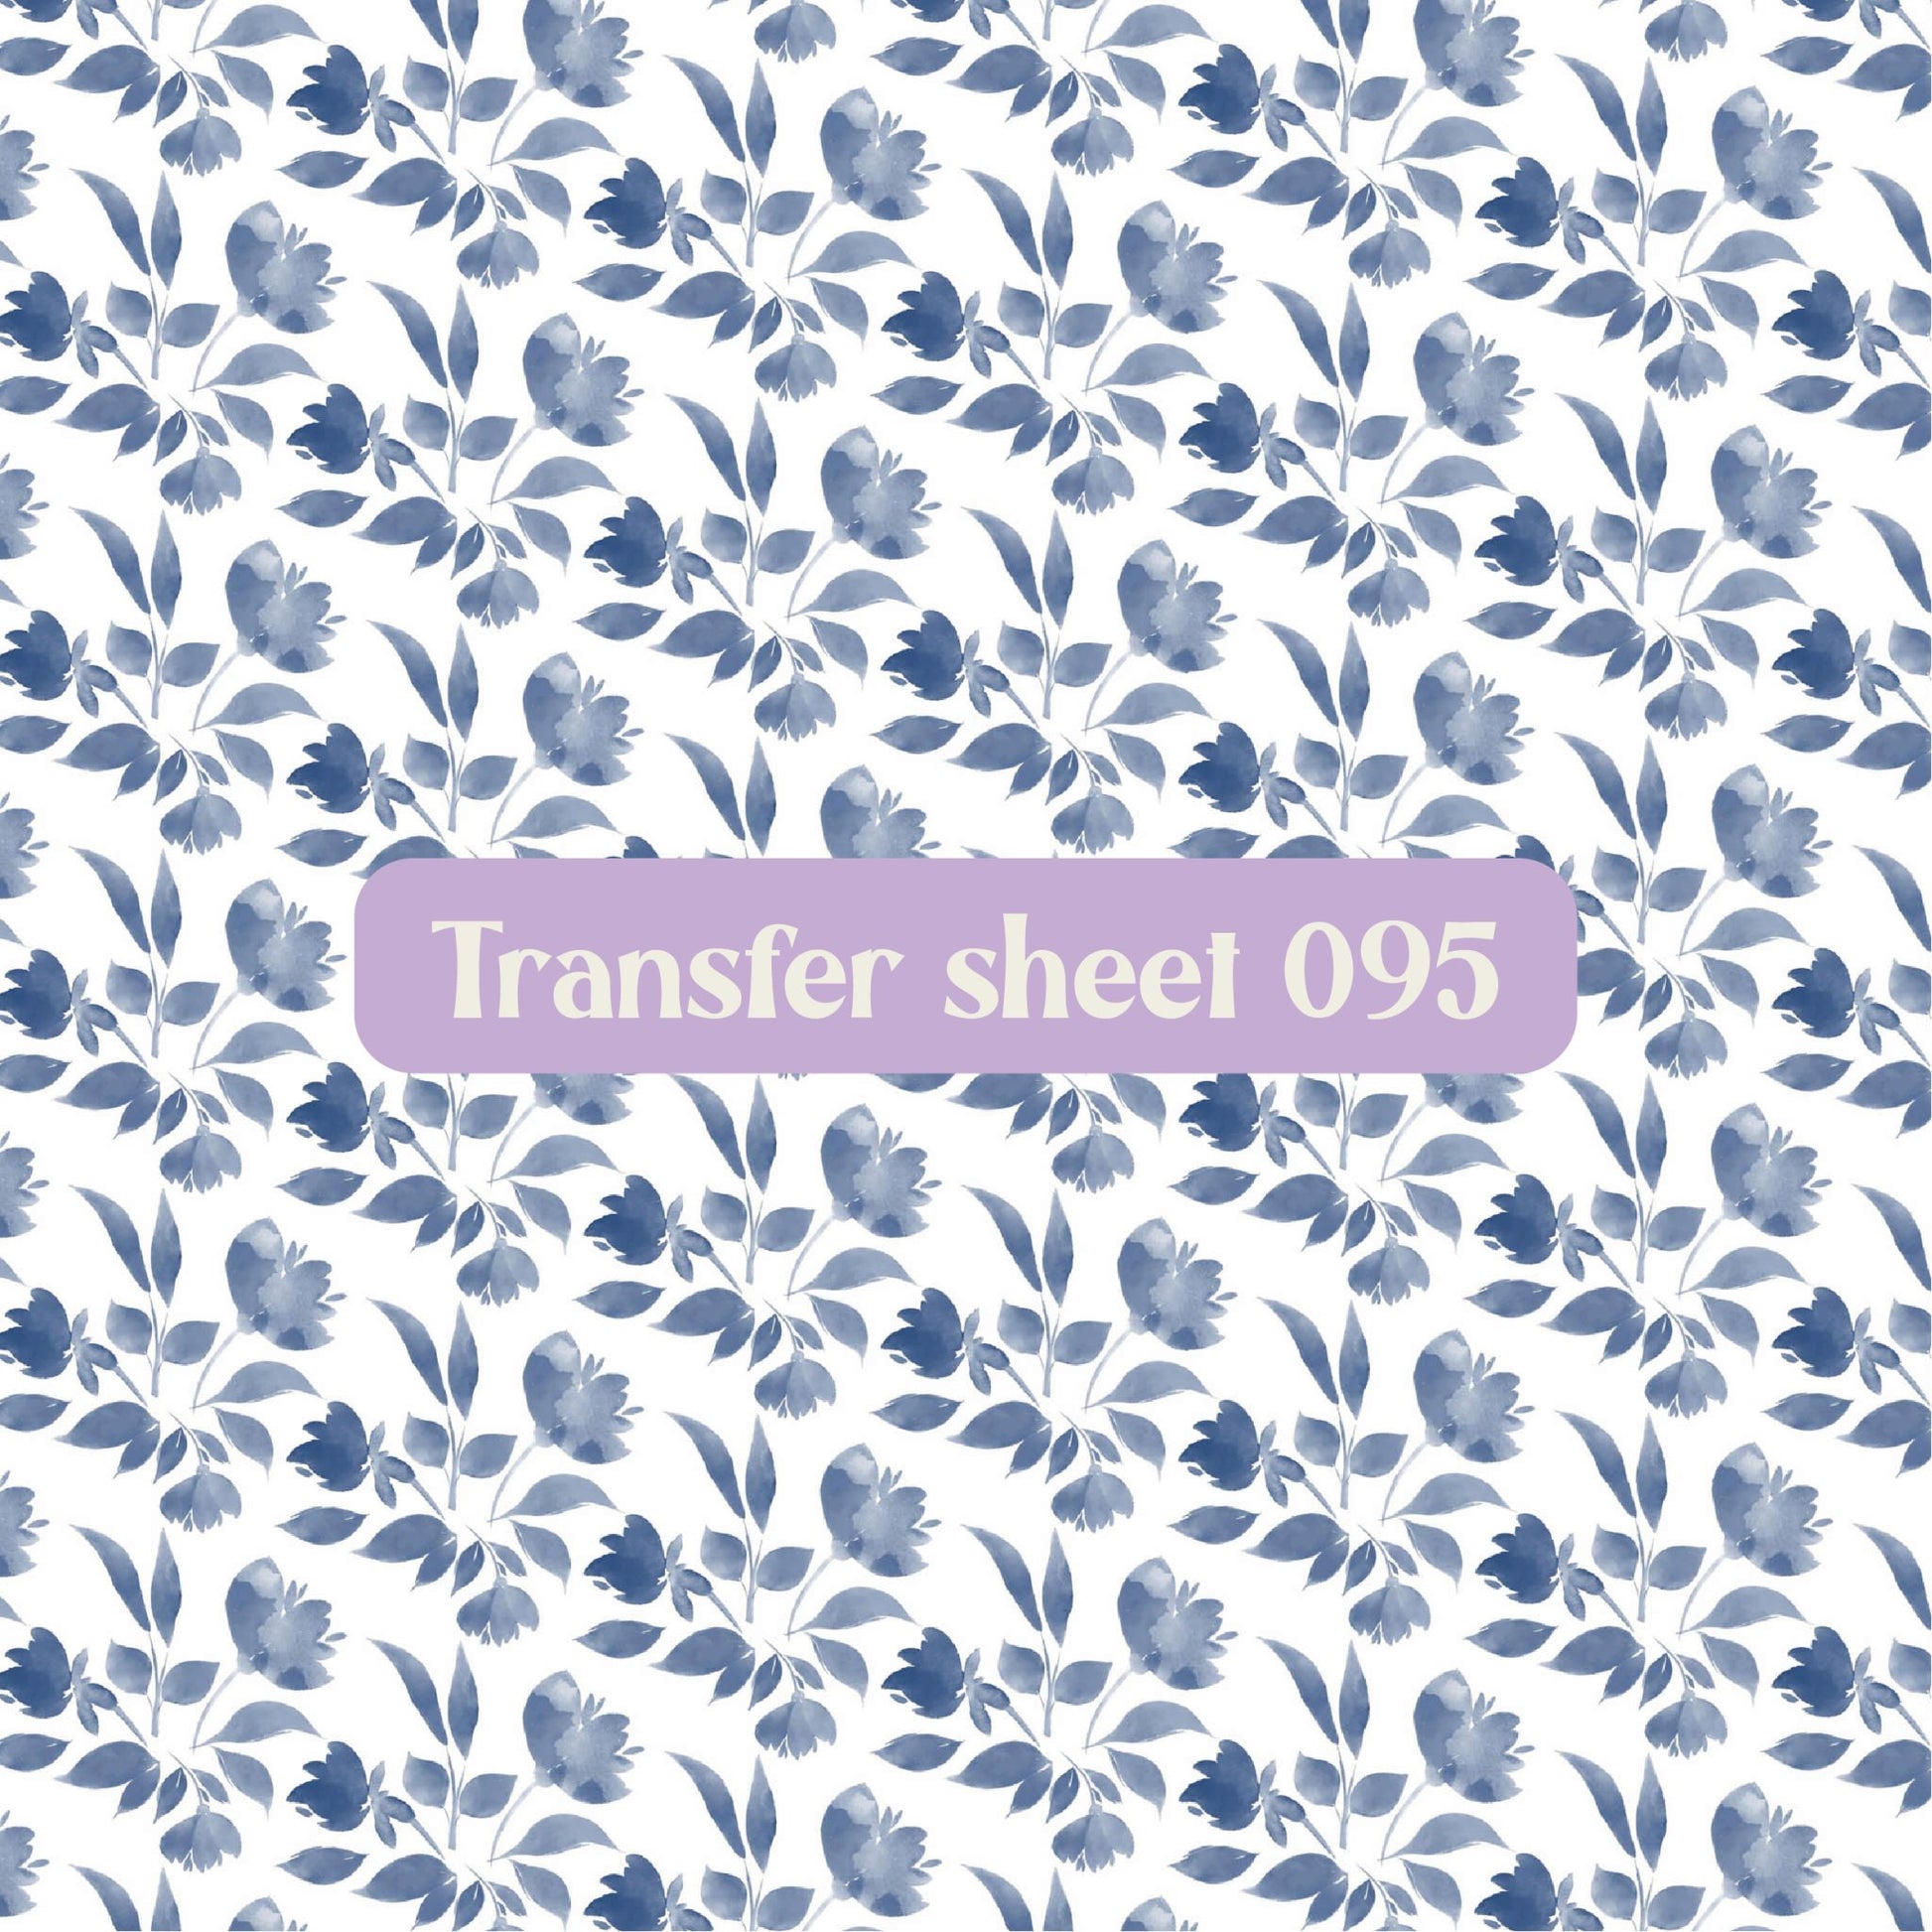 Transfer sheet 095 - Transfer paper - CLN Atelier